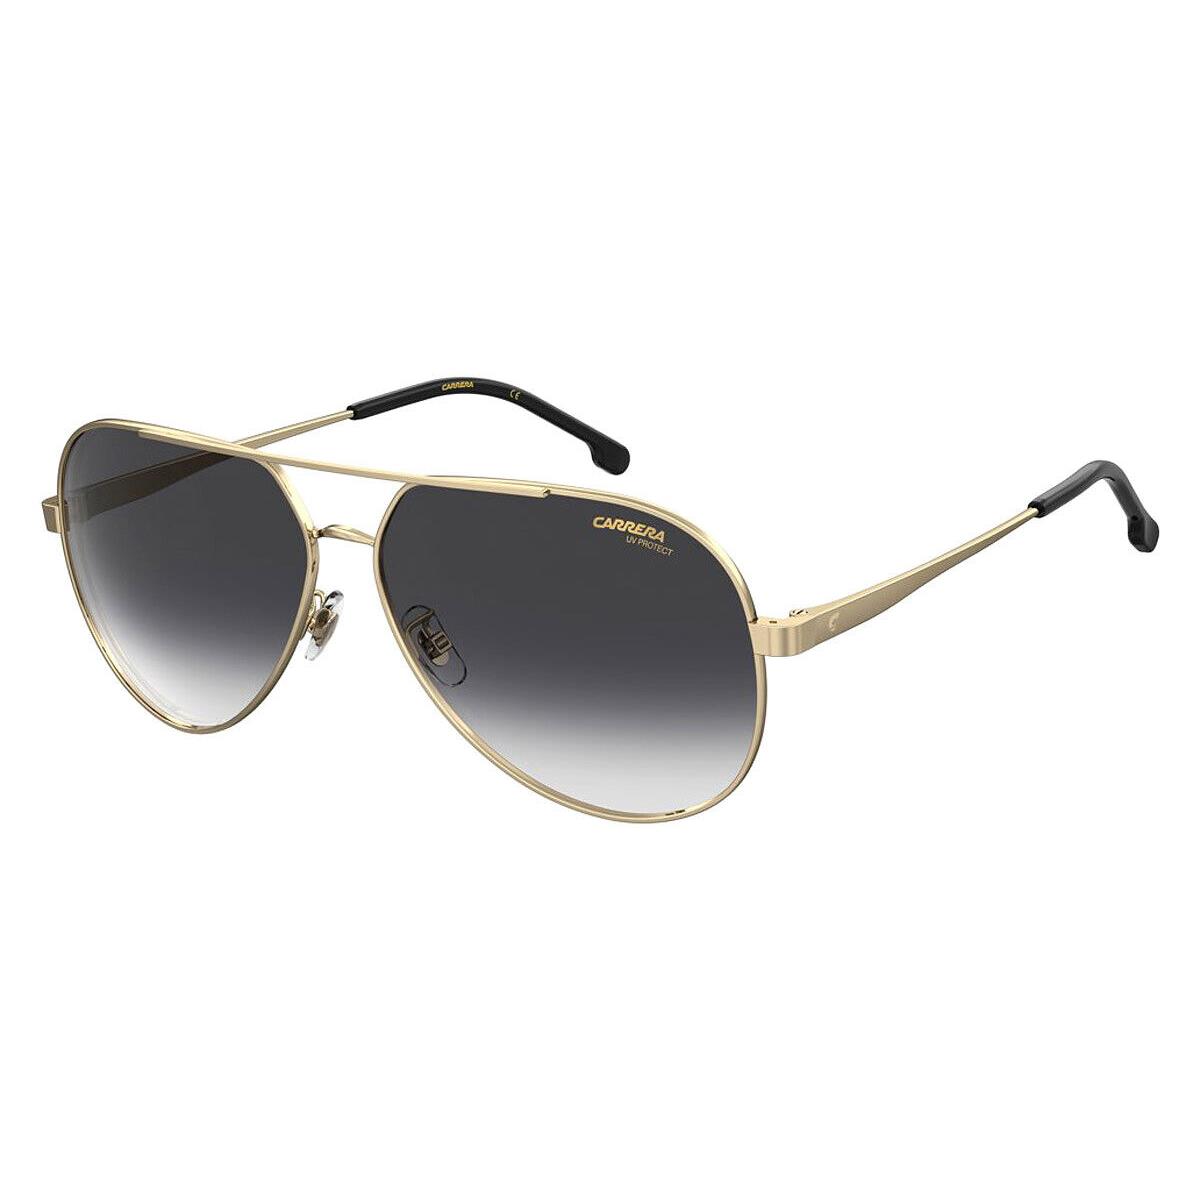 Carrera Car Sunglasses Women Gold Black / Gray Shaded 63mm